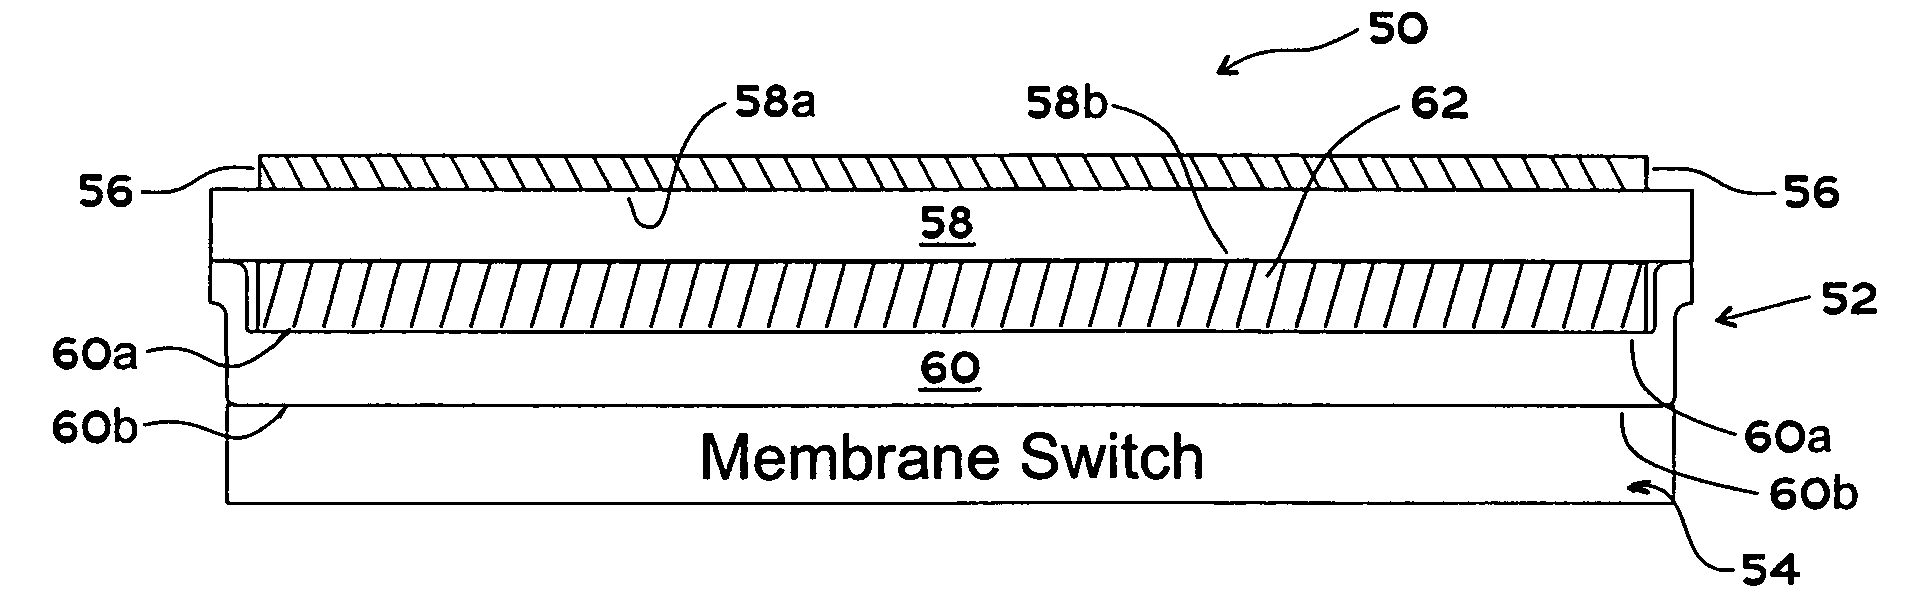 Electroluminescent lamp membrane switch